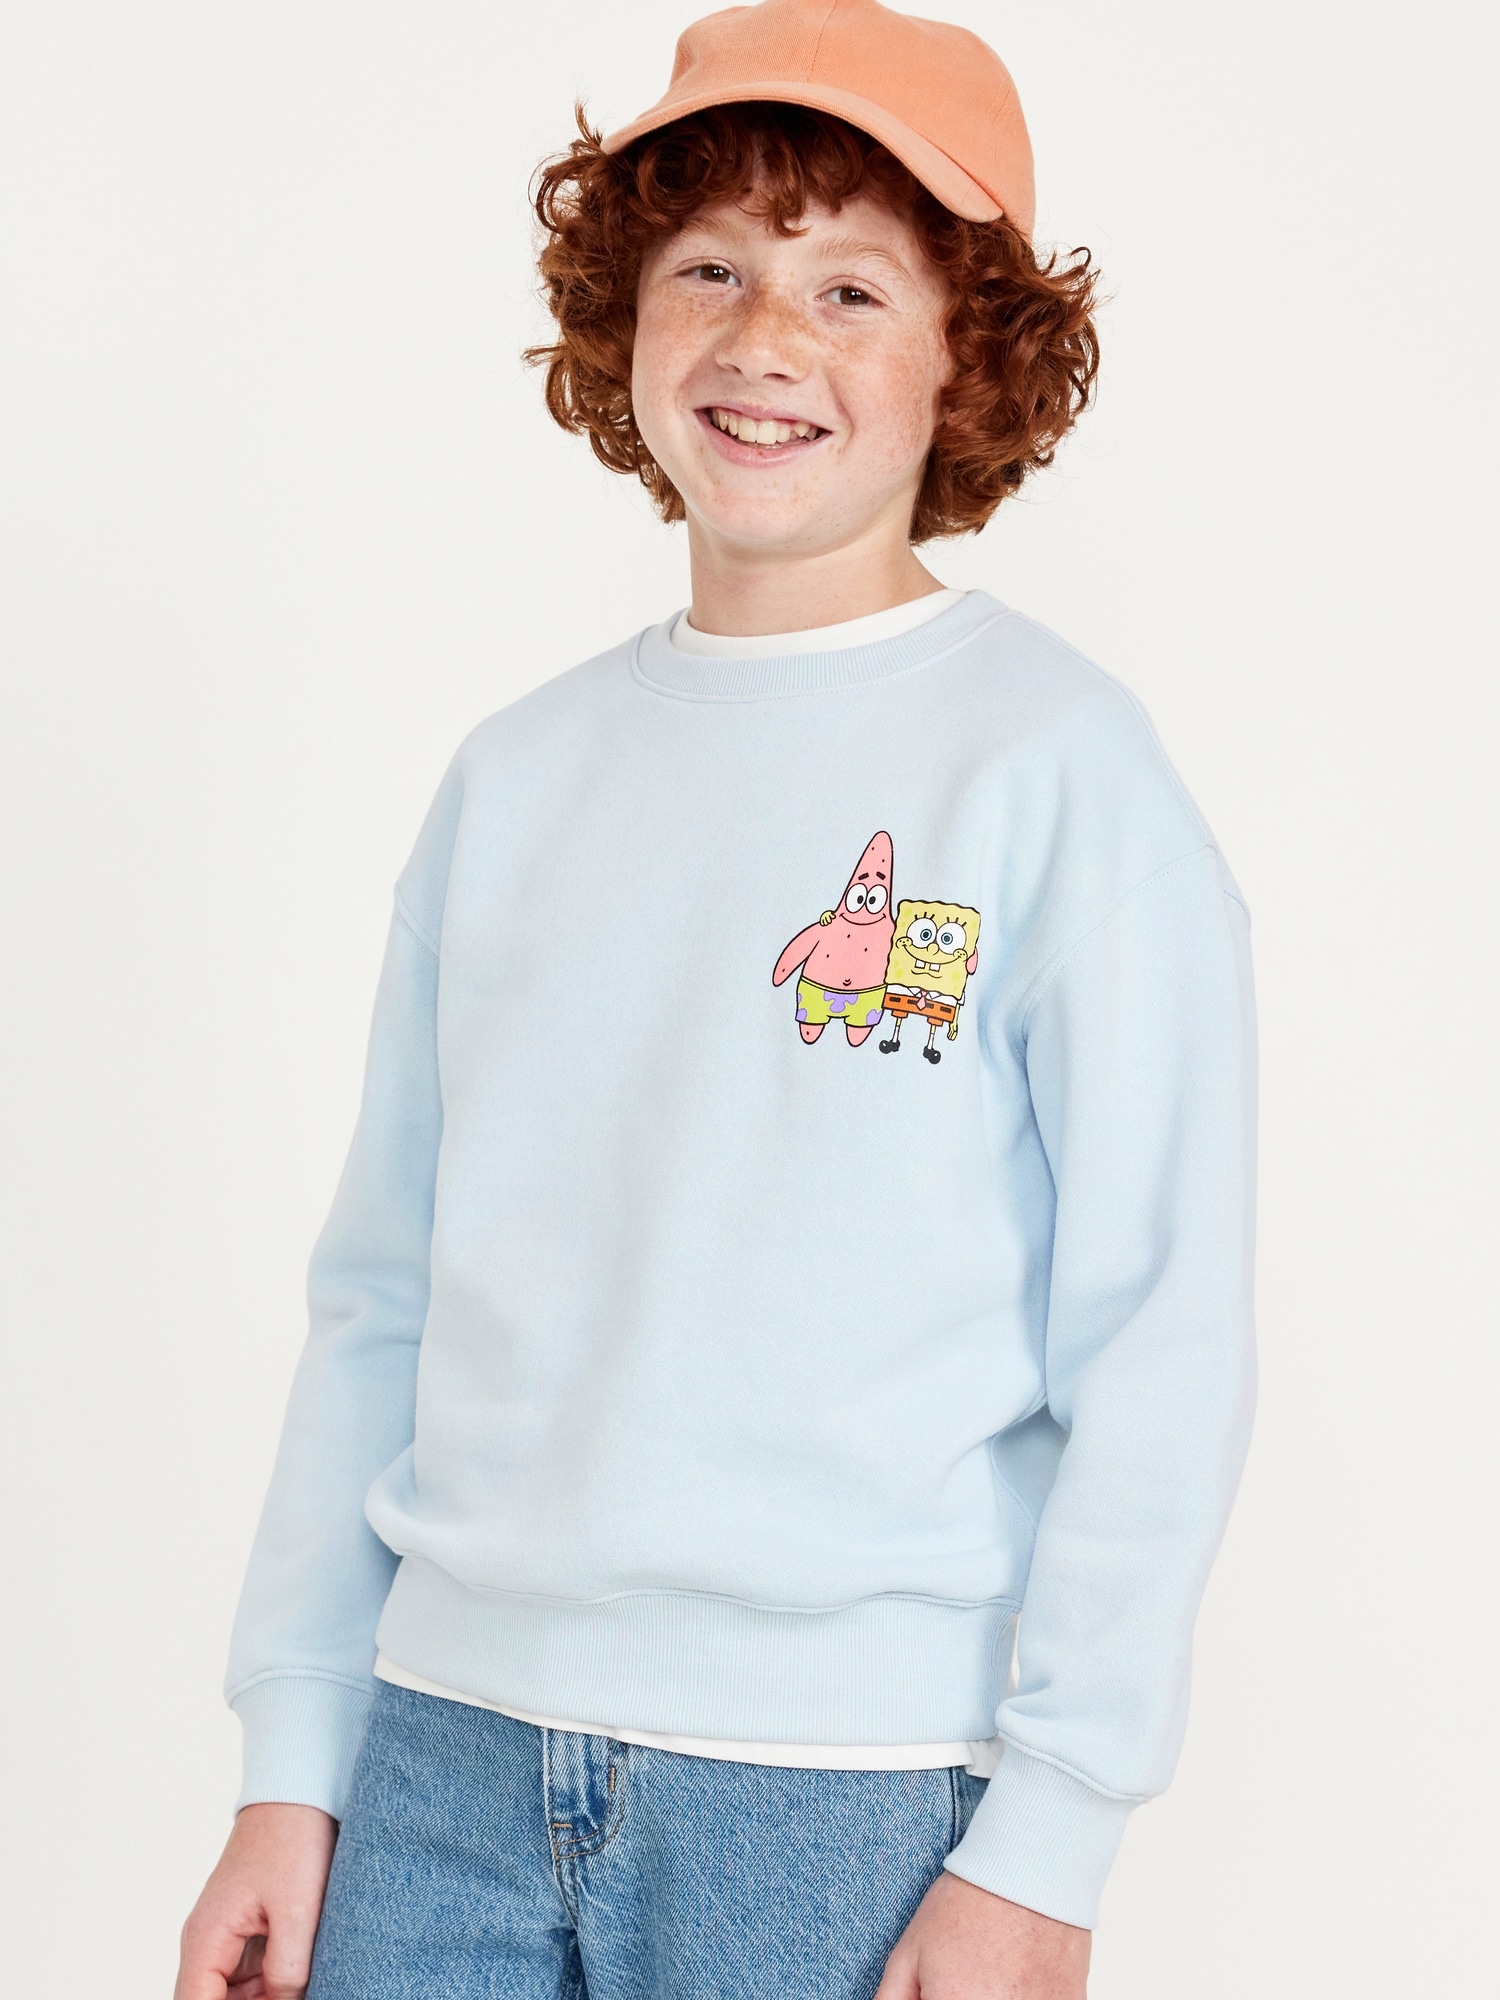 SpongeBob SquarePants Gender-Neutral Crew-Neck Sweatshirt for Kids